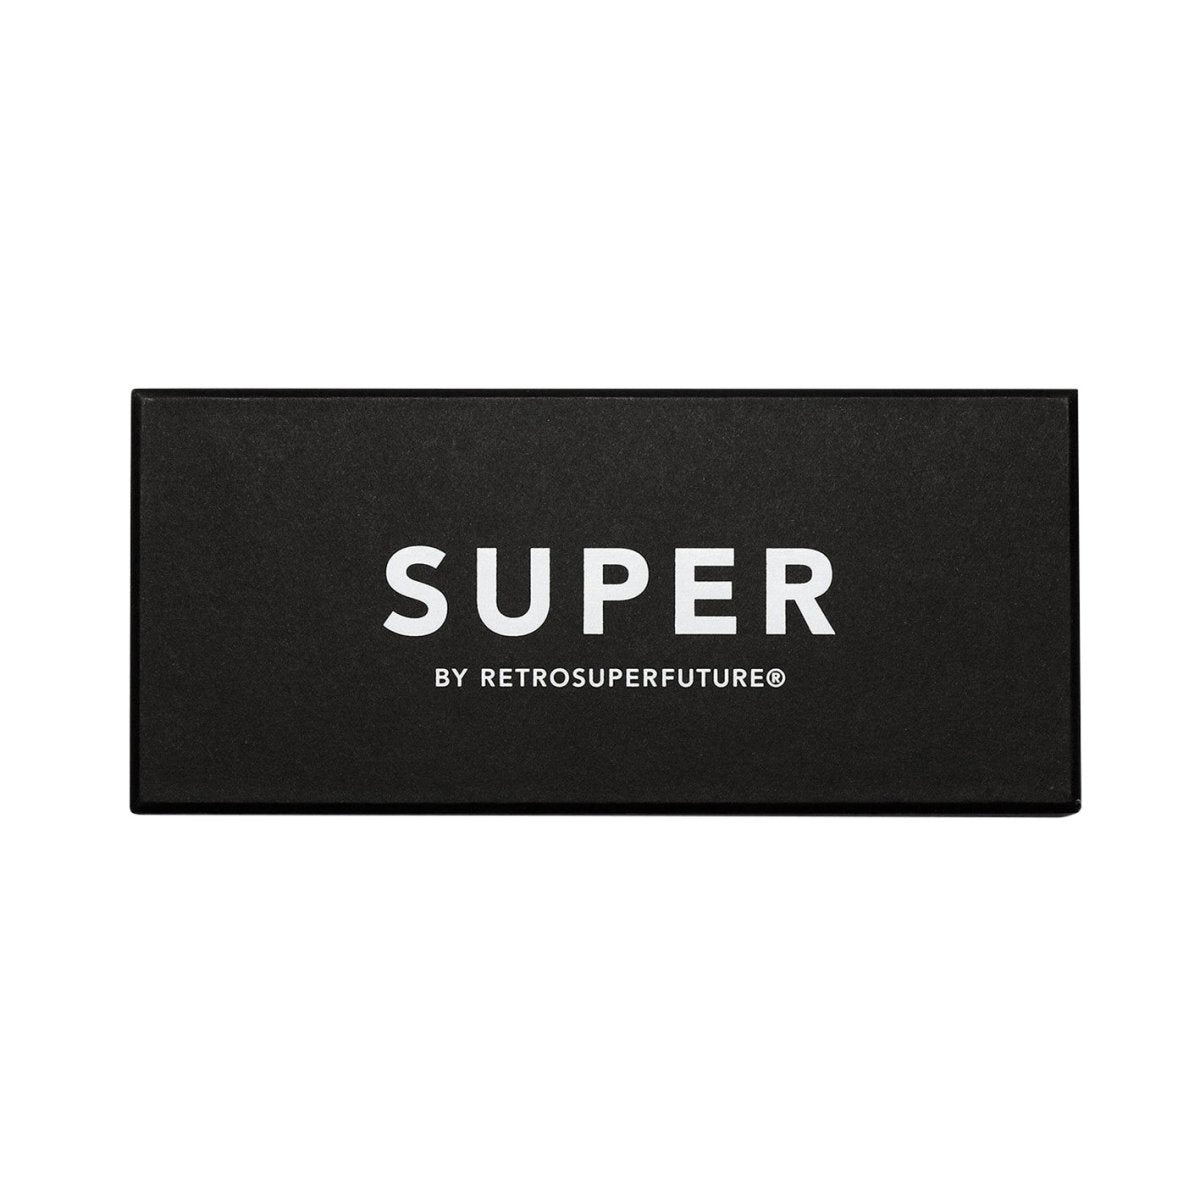 Super by Retrosuperfuture Unico (Schwarz)  - Allike Store